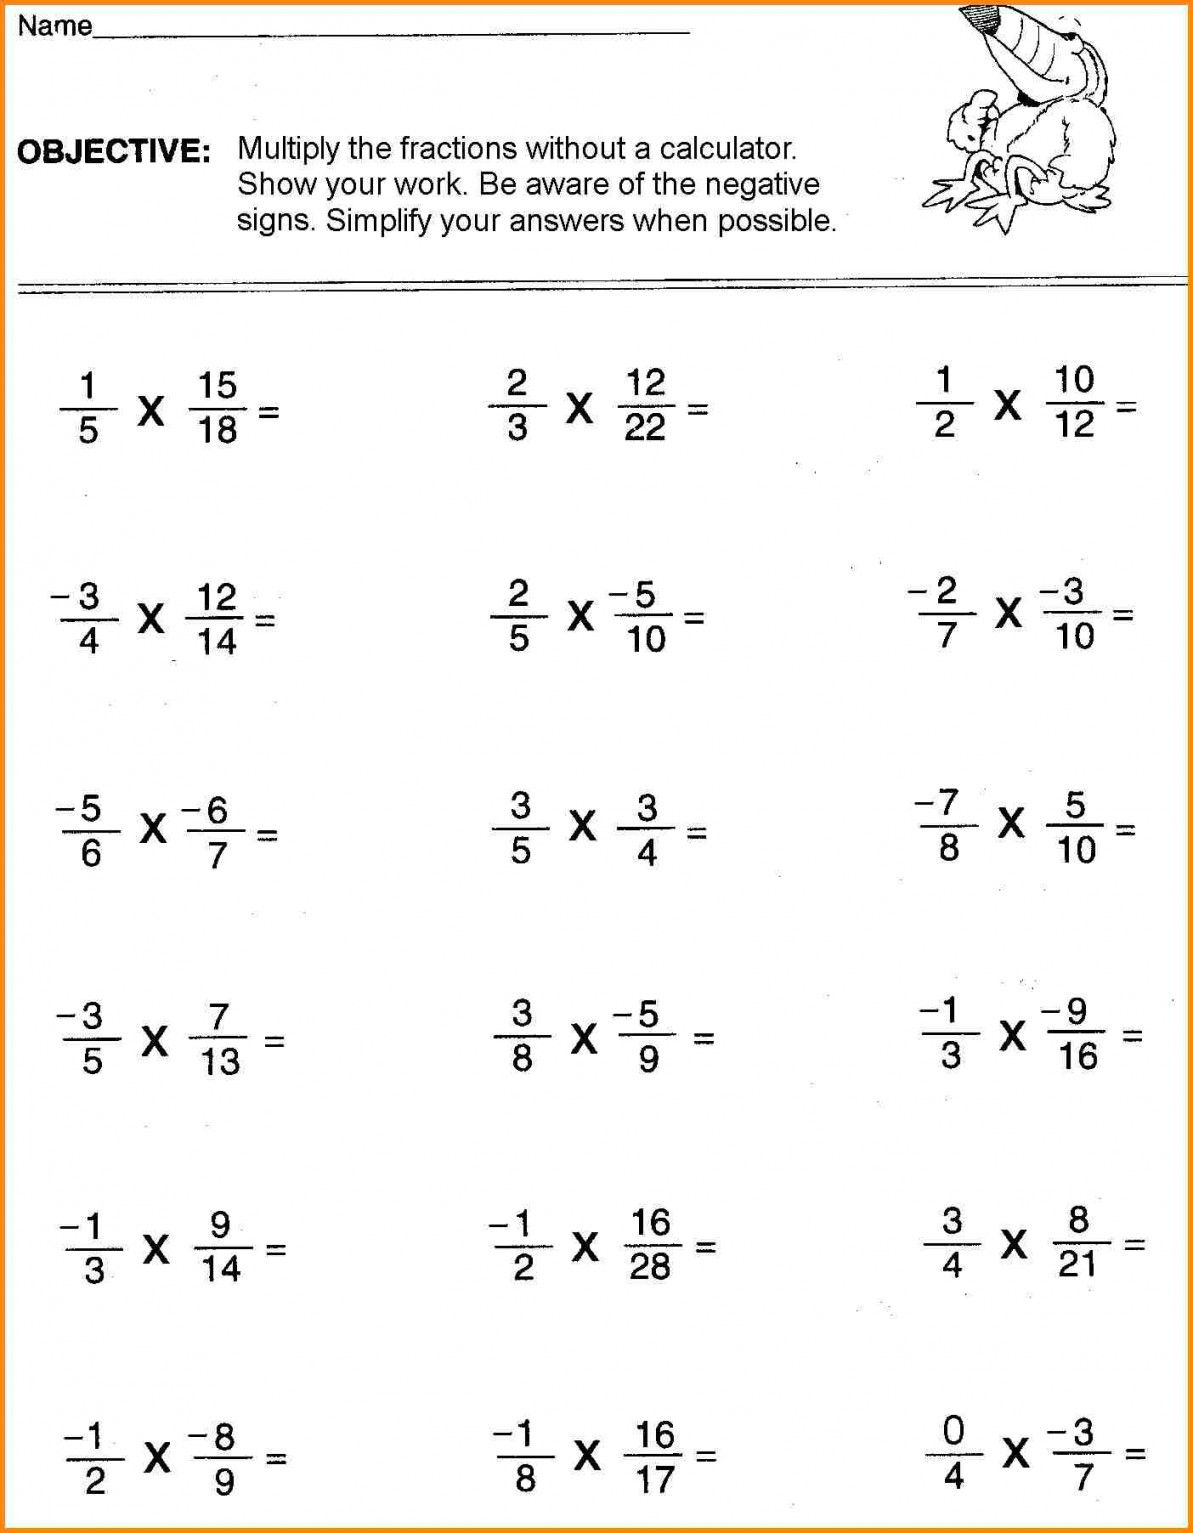 Free Printable 7Th Grade Math Worksheets | Lostranquillos - Free Printable 7Th Grade Math Worksheets